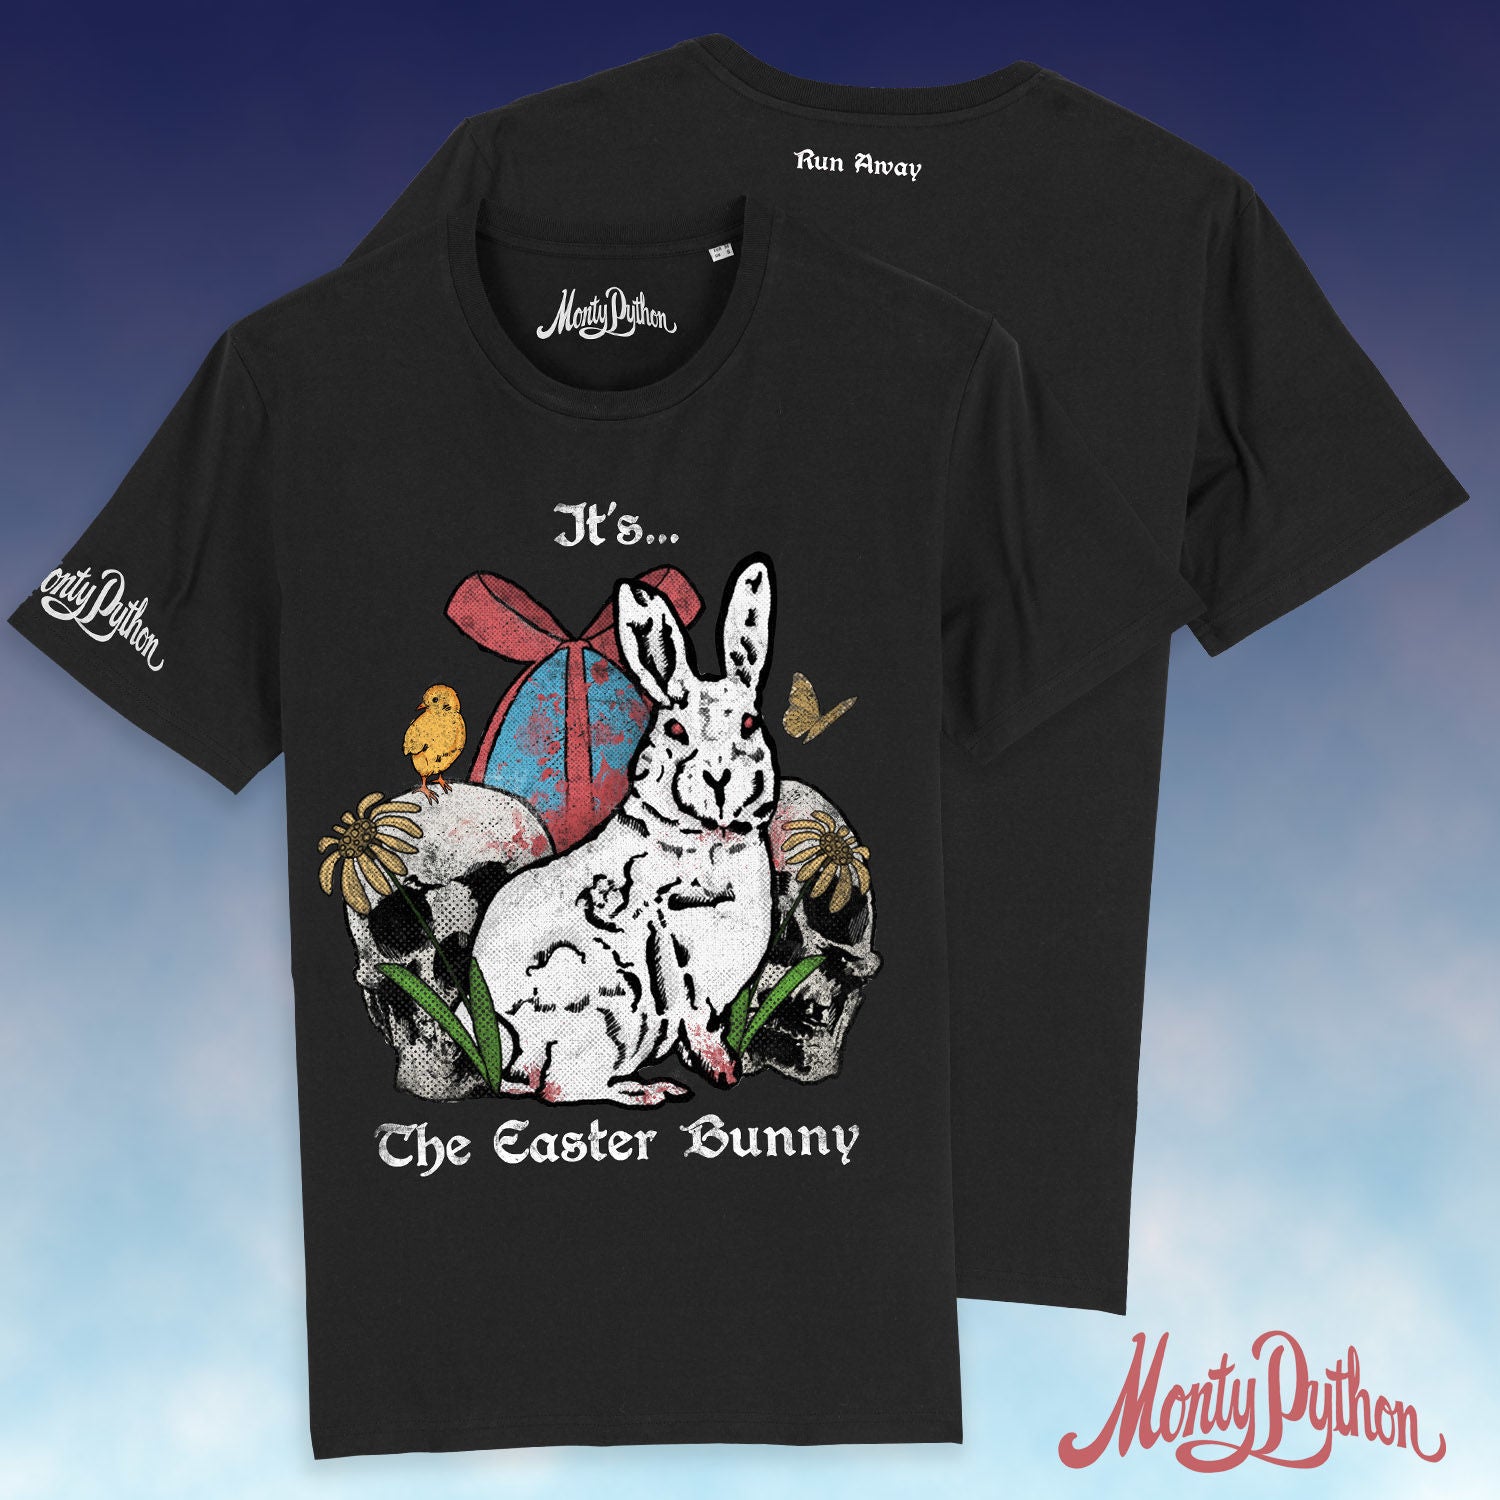 Monty Python - Monty Python 'Killer Rabbit' Black Easter T-shirt RUN AWAY!